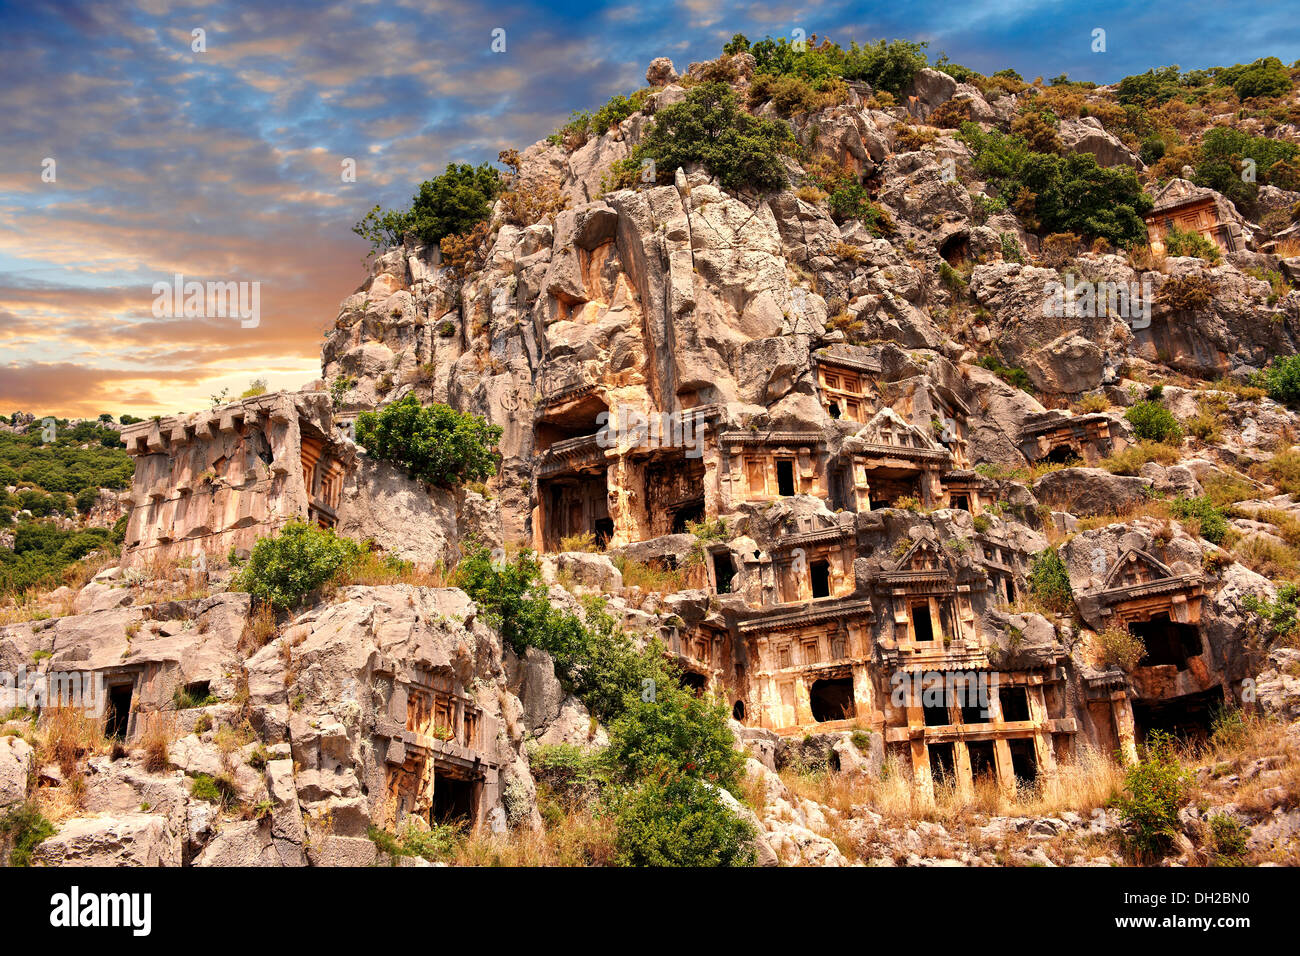 The ancient Lycian rock cut tombs town of Myra, Anatolia, Turkey. Stock Photo